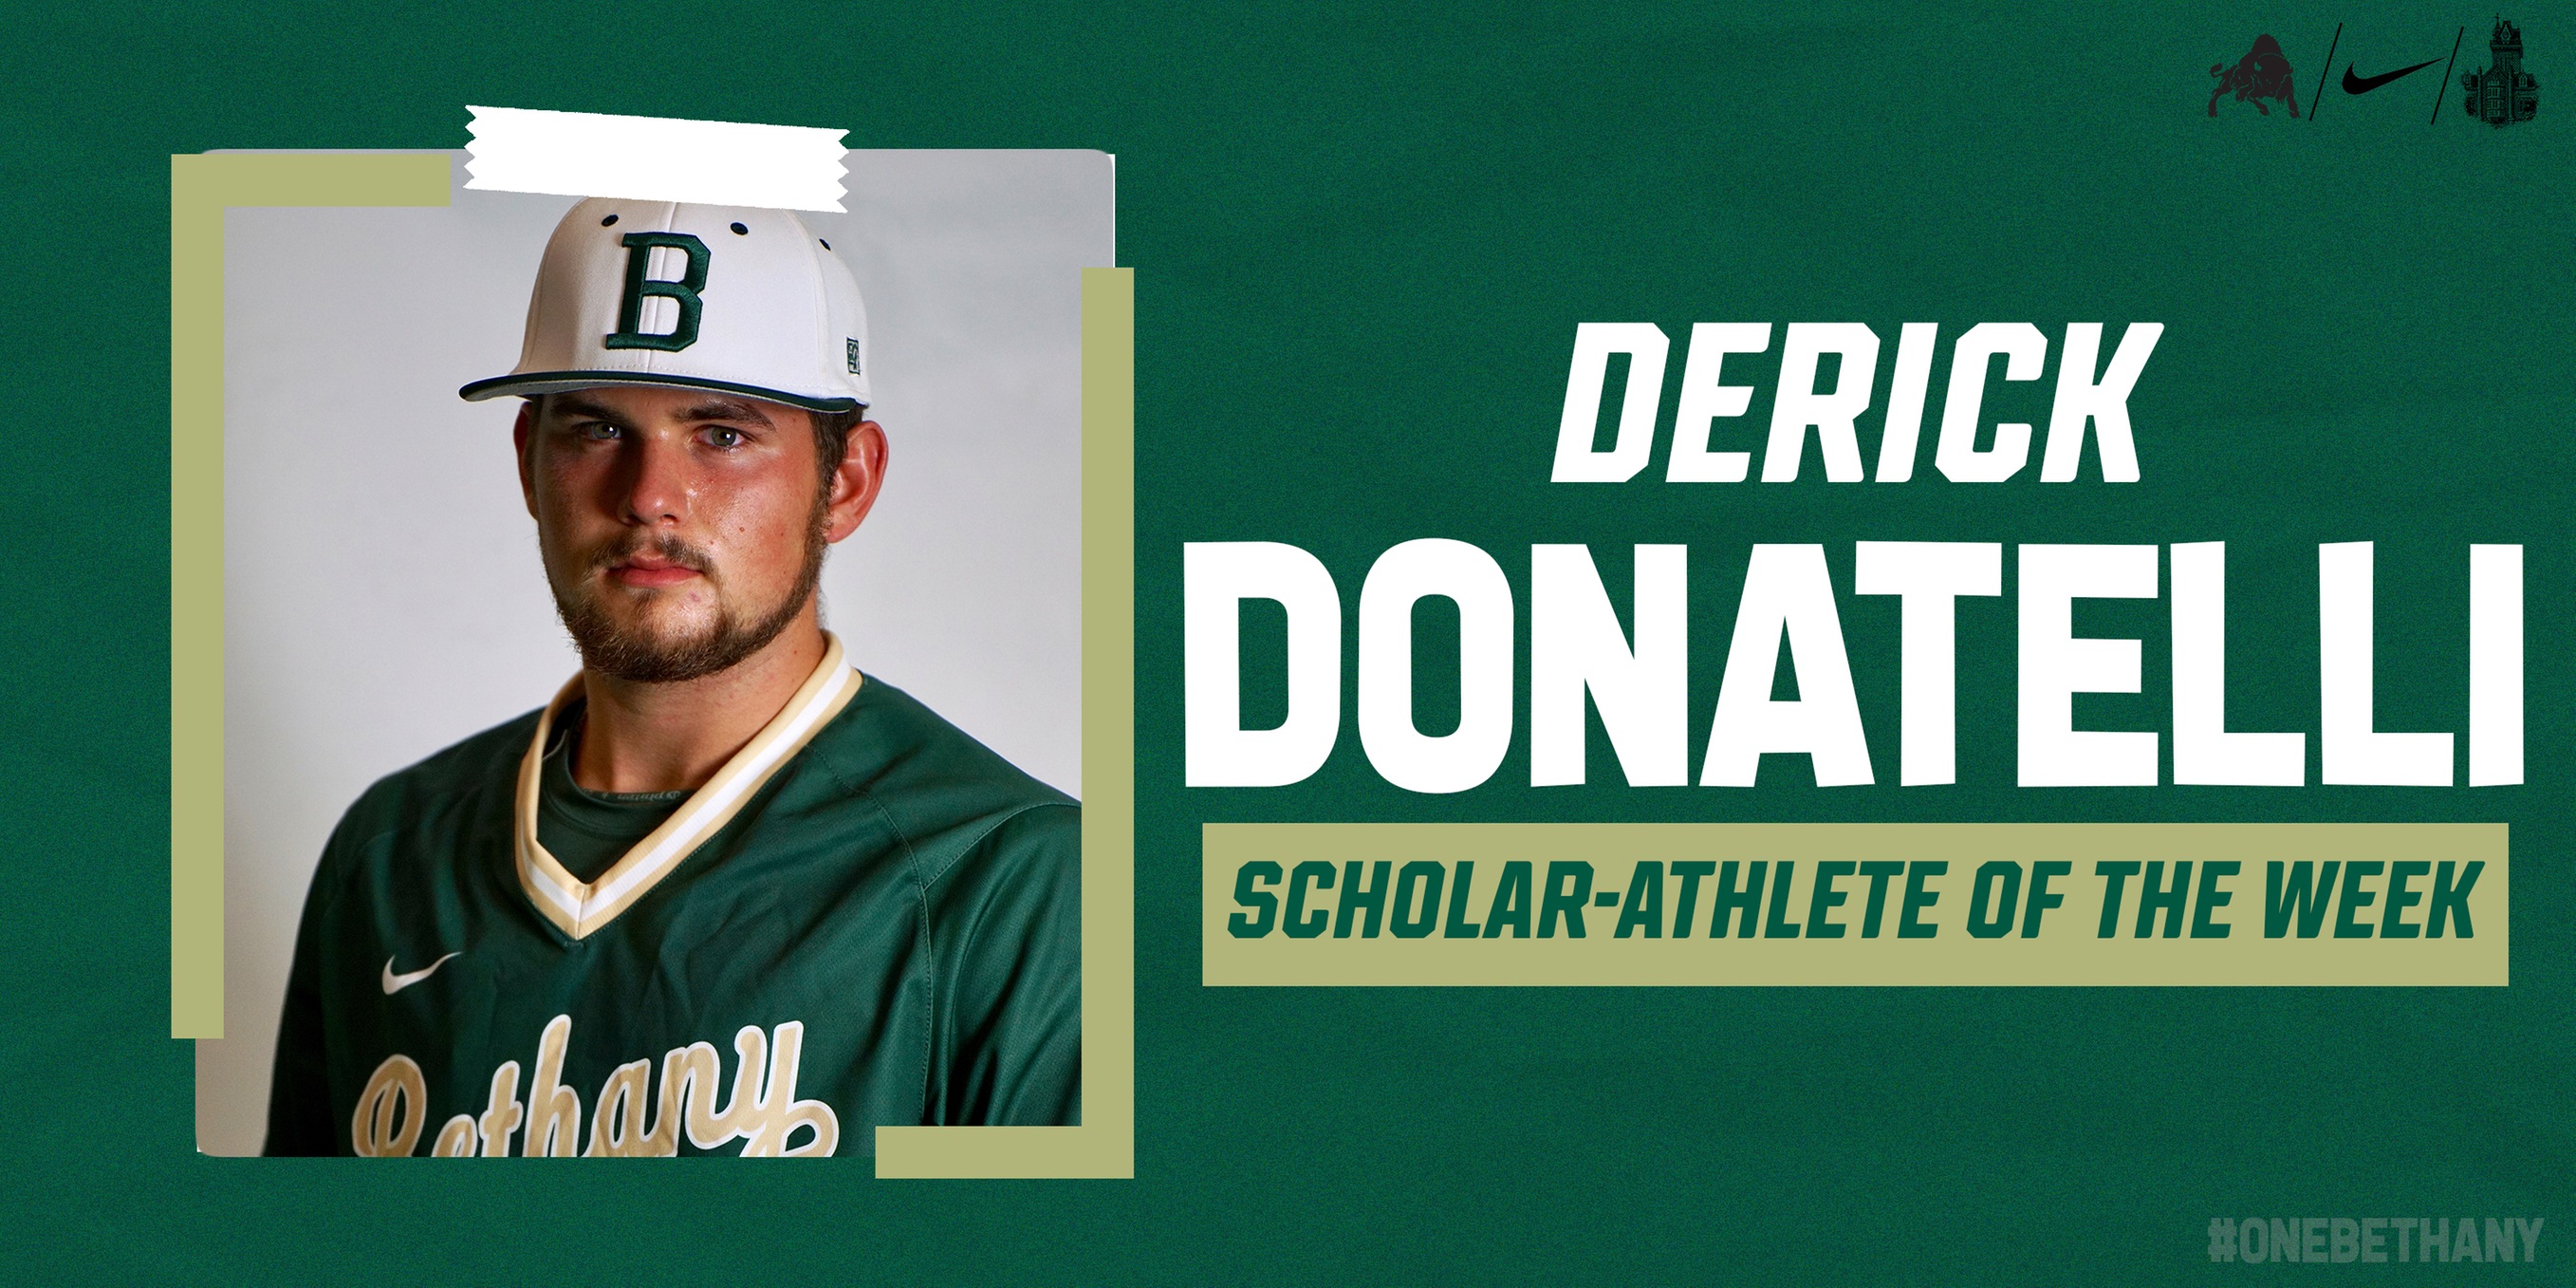 Bison Scholar-Athlete Spotlight: Derick Donatelli